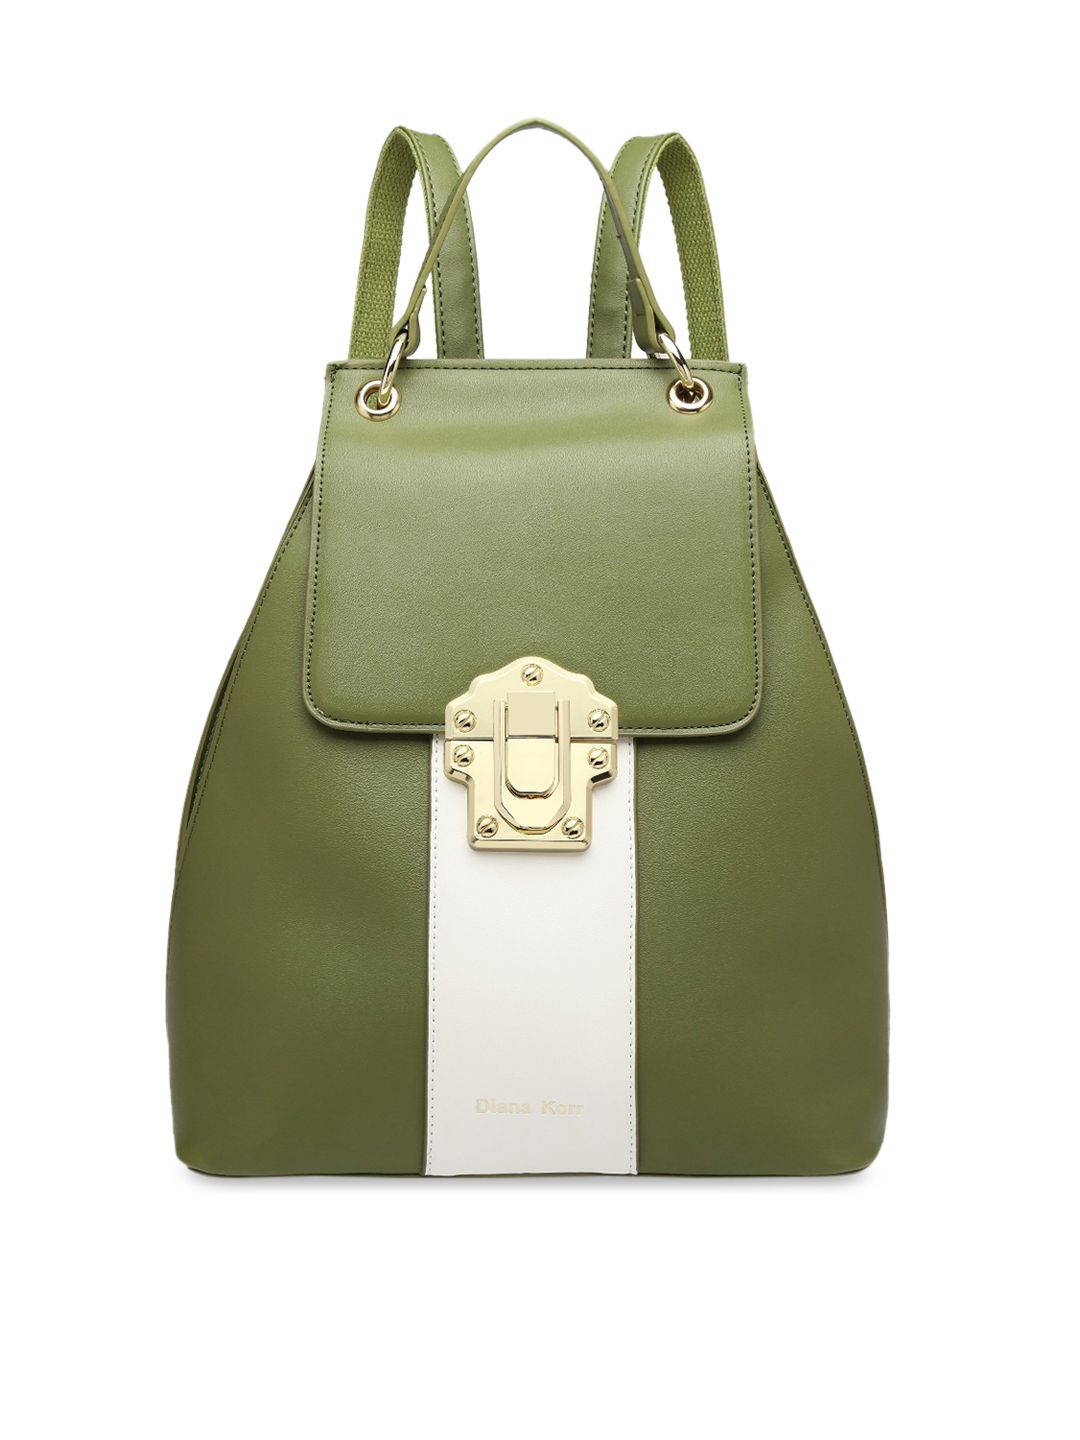 Diana Korr Women Green & White Colourblocked Backpack Price in India